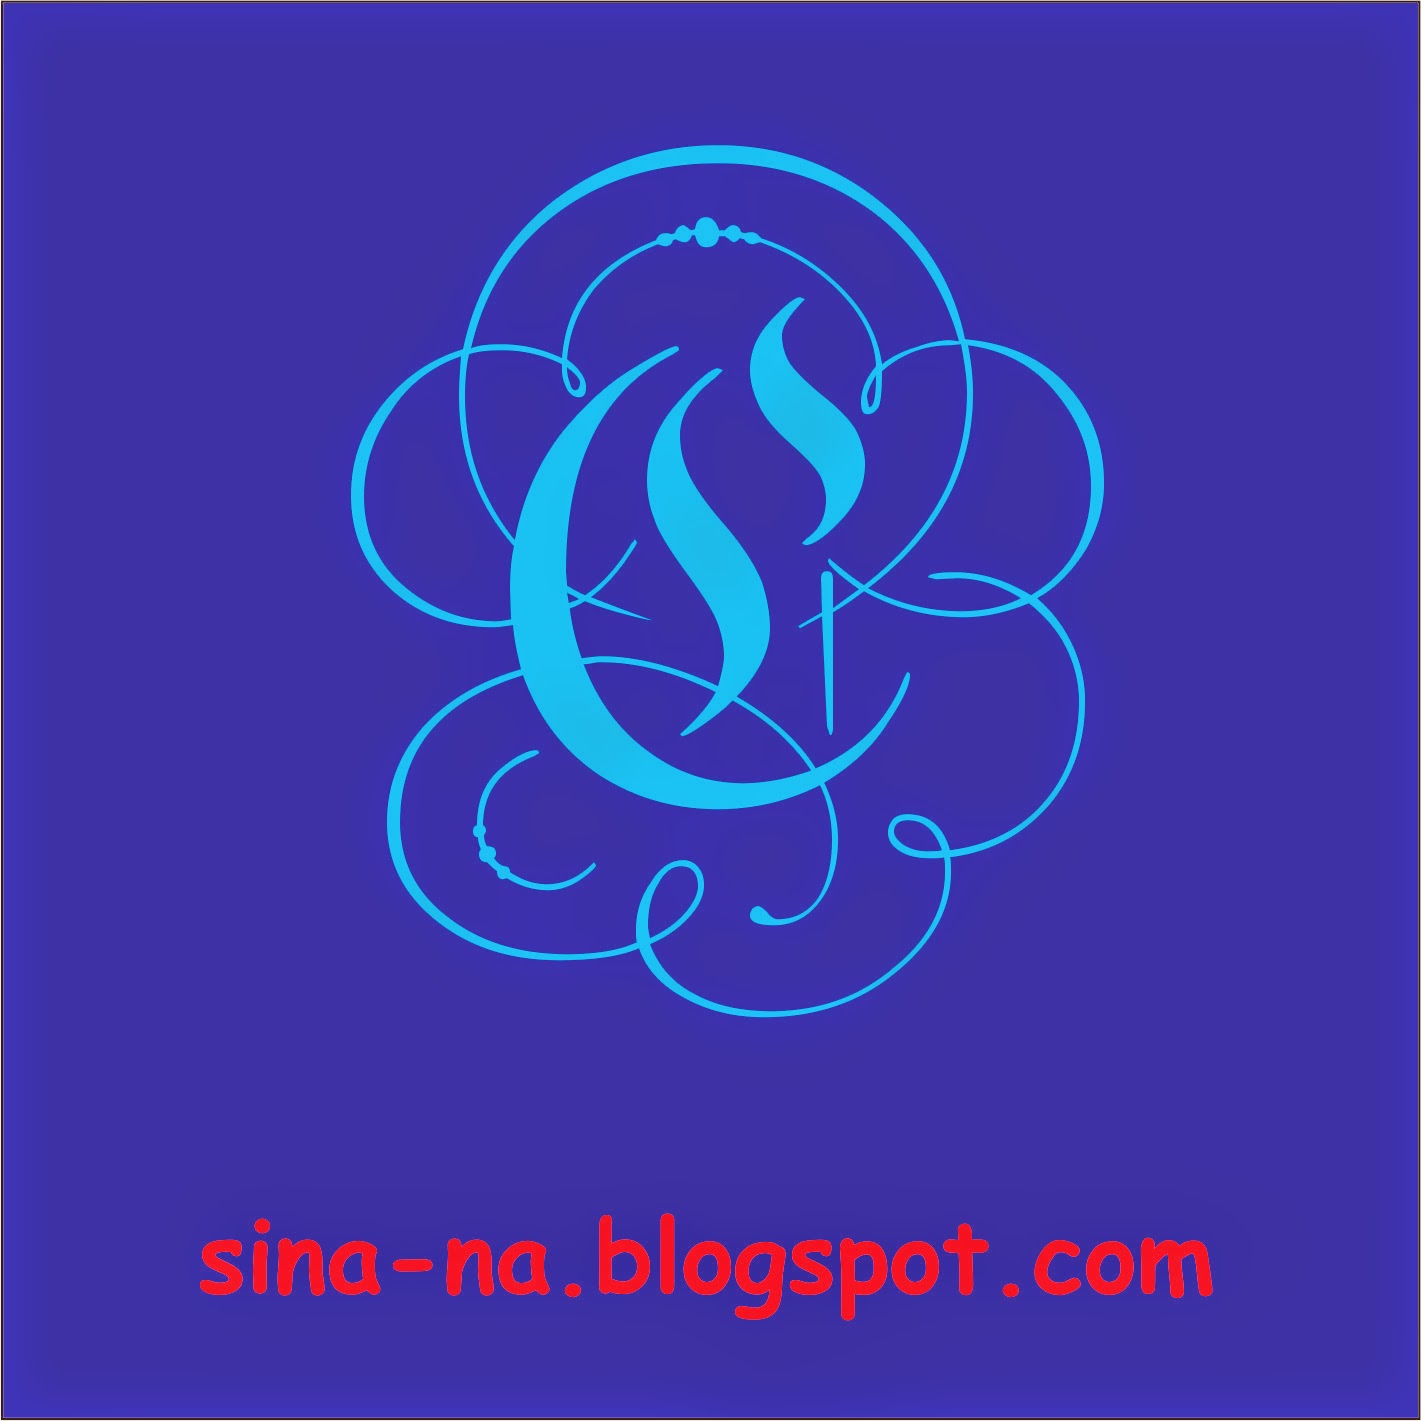 http://sina-na.blogspot.com